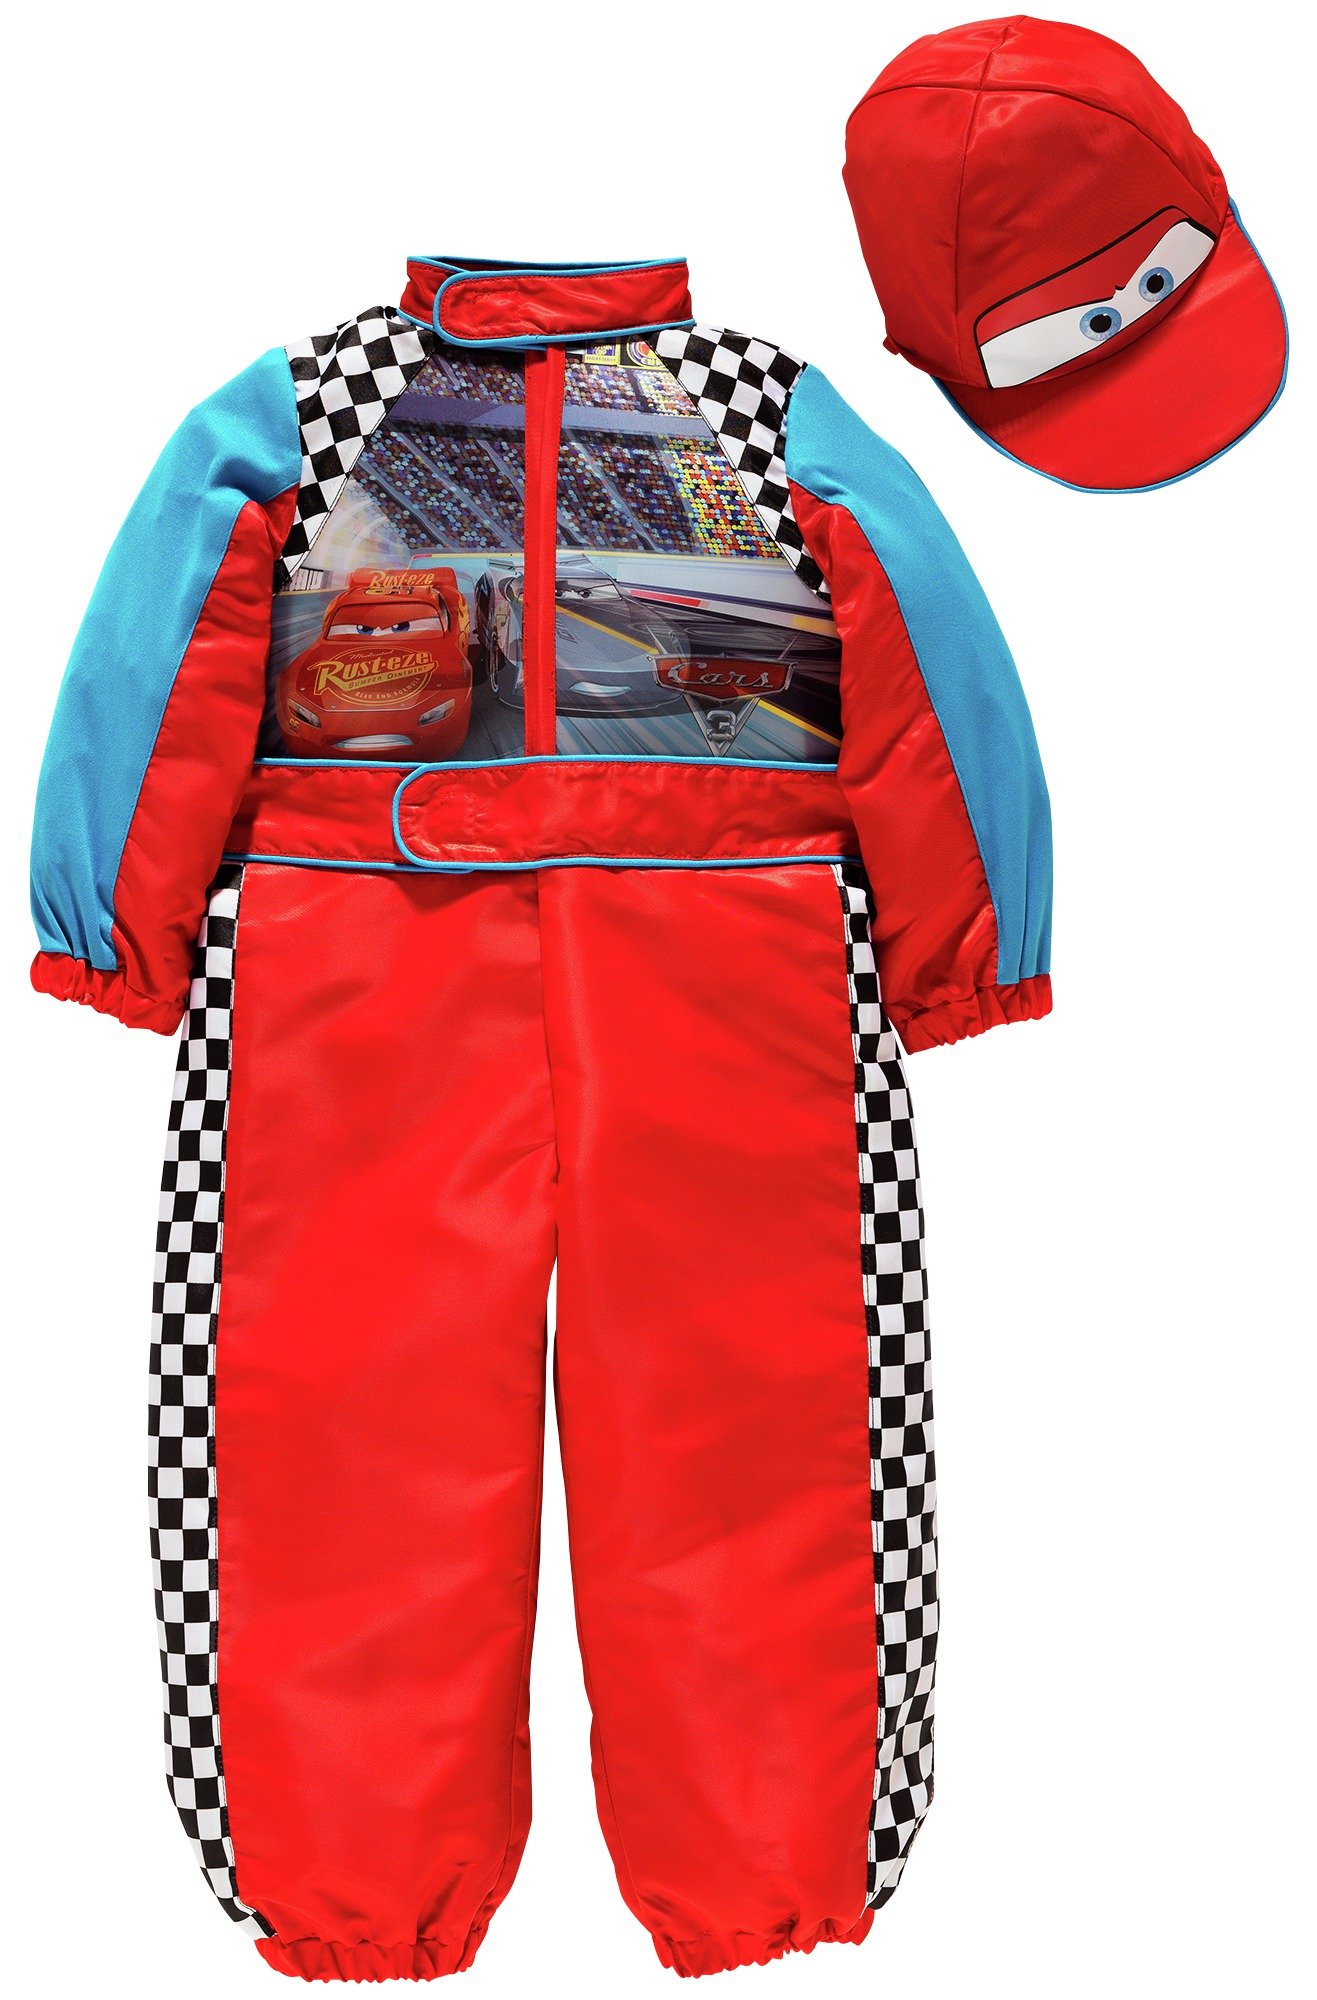 Disney Cars Racing Car Fancy Dress Costume - 1-2 Years